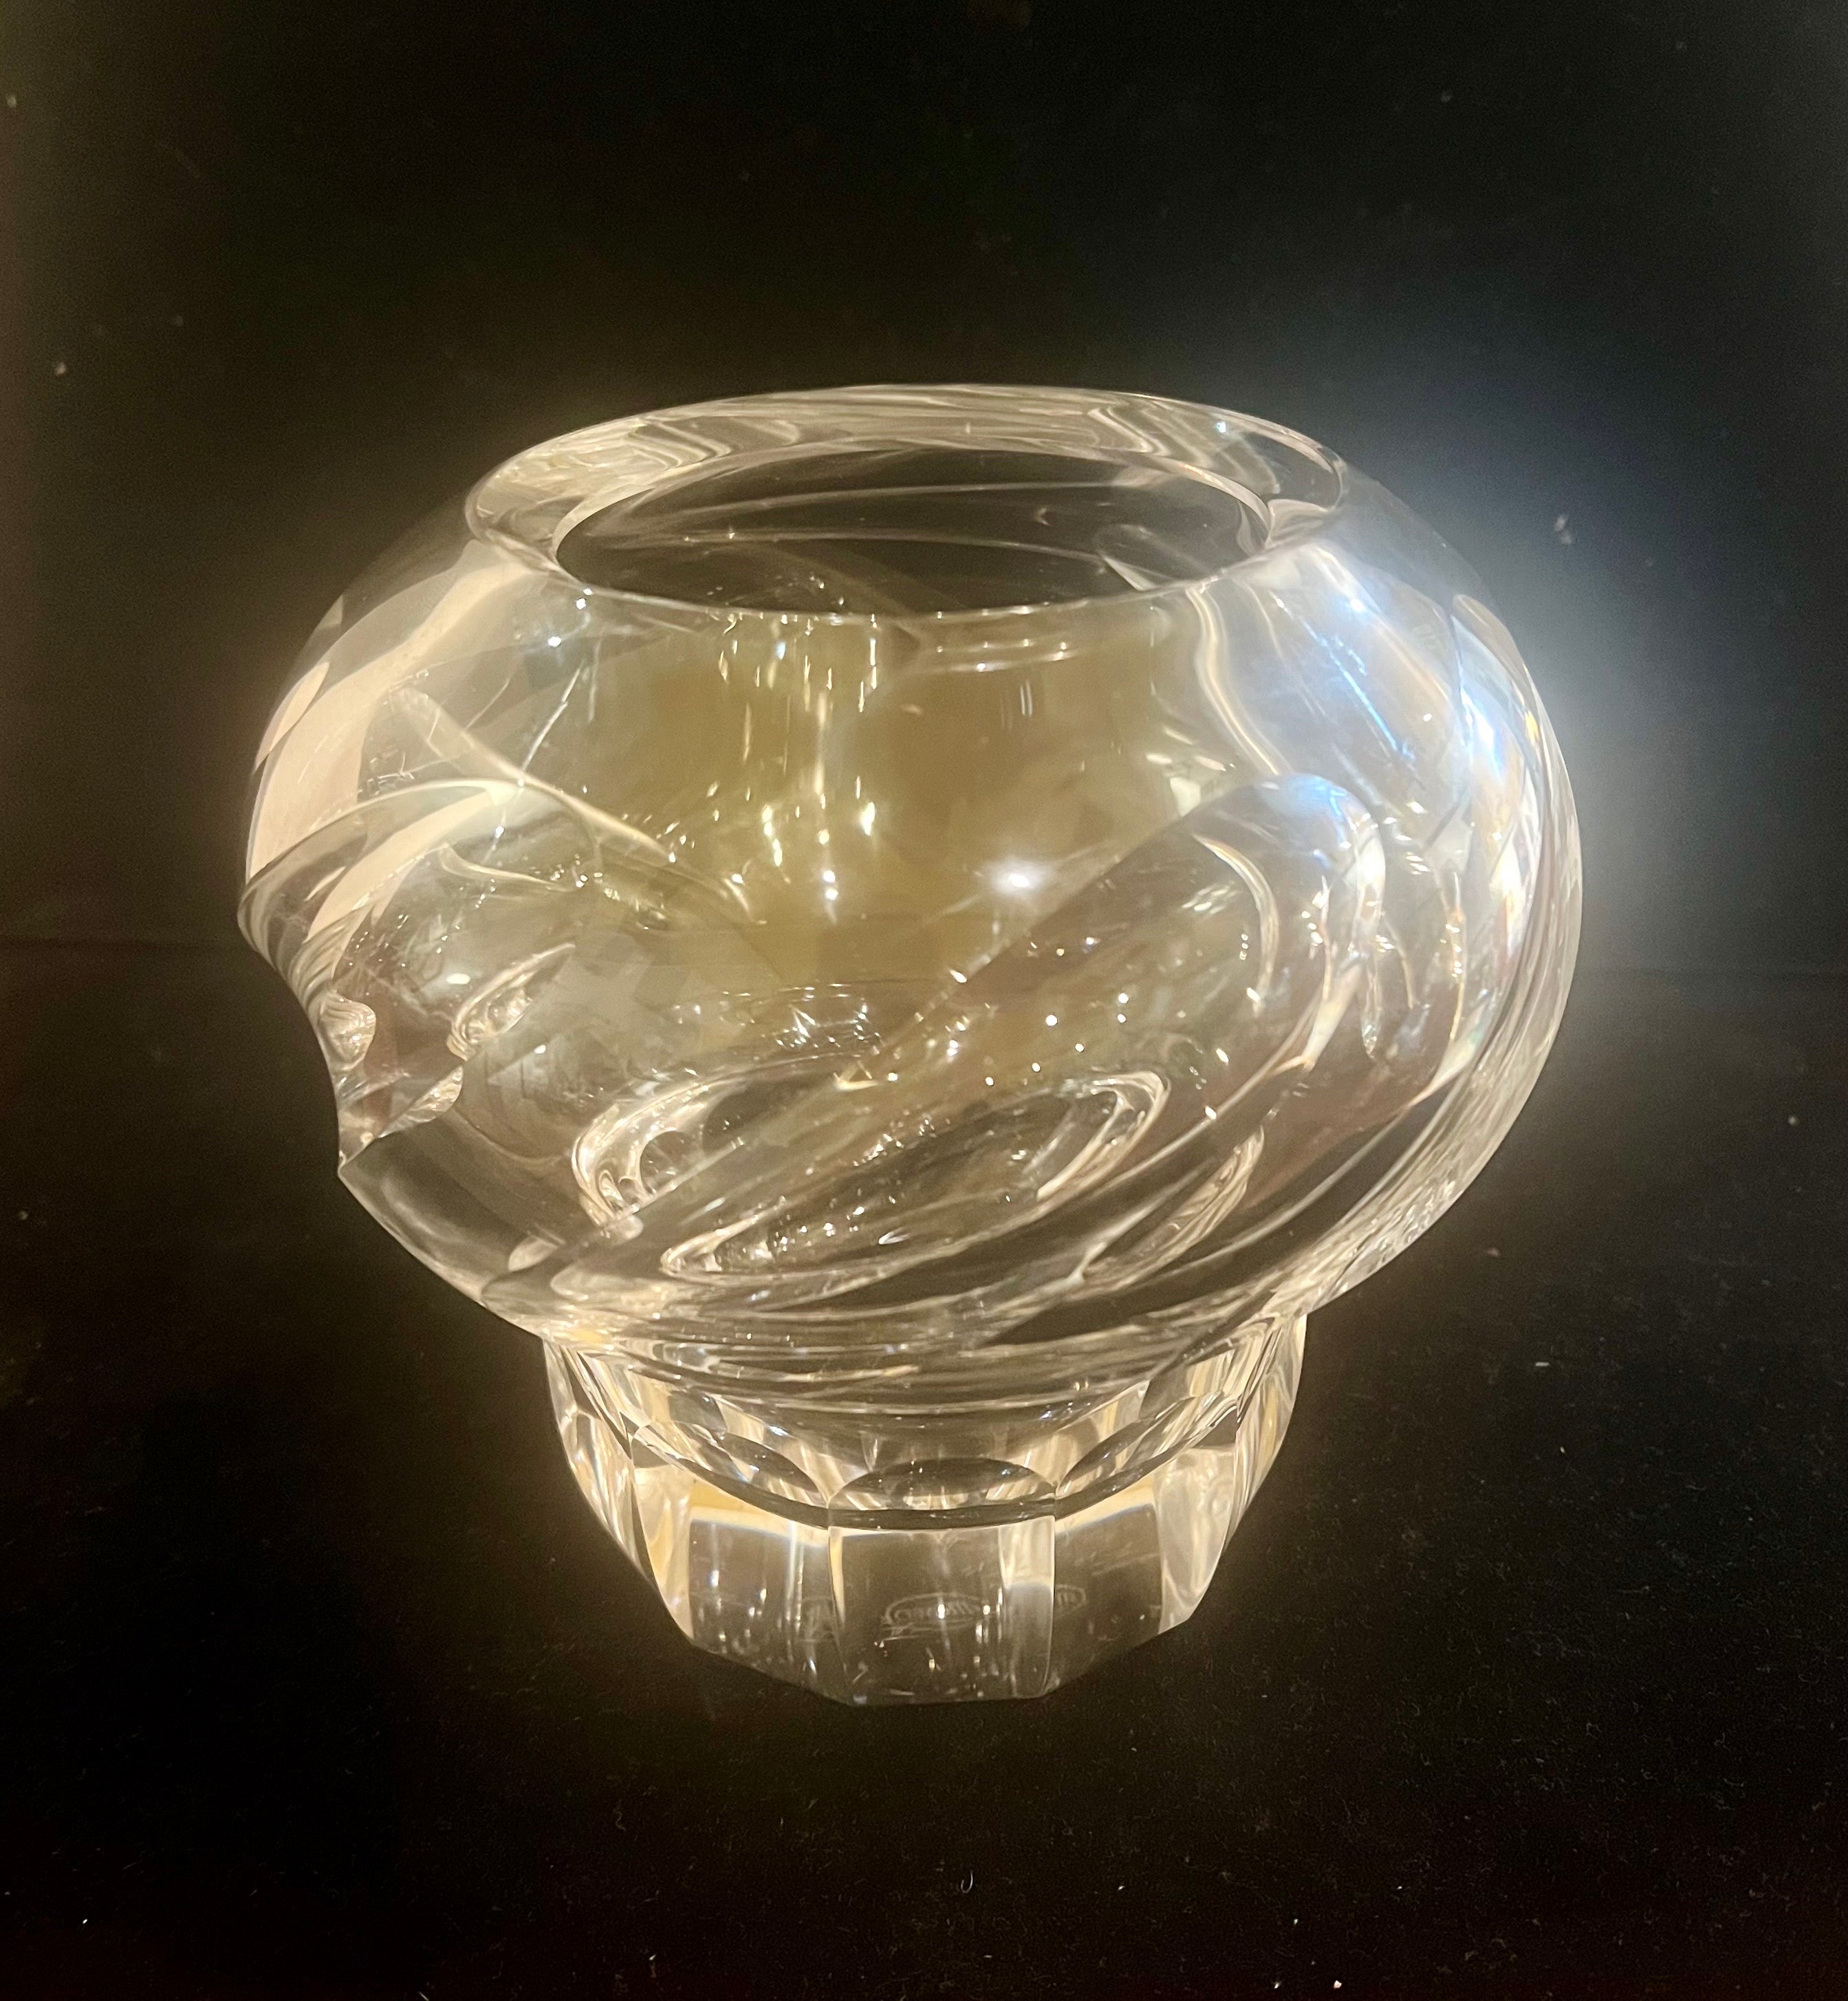 Magnifique vase en cristal Elegant de Moser circa 1980's, excellent état, pas d'éclats ni de rayures, design magnifique.